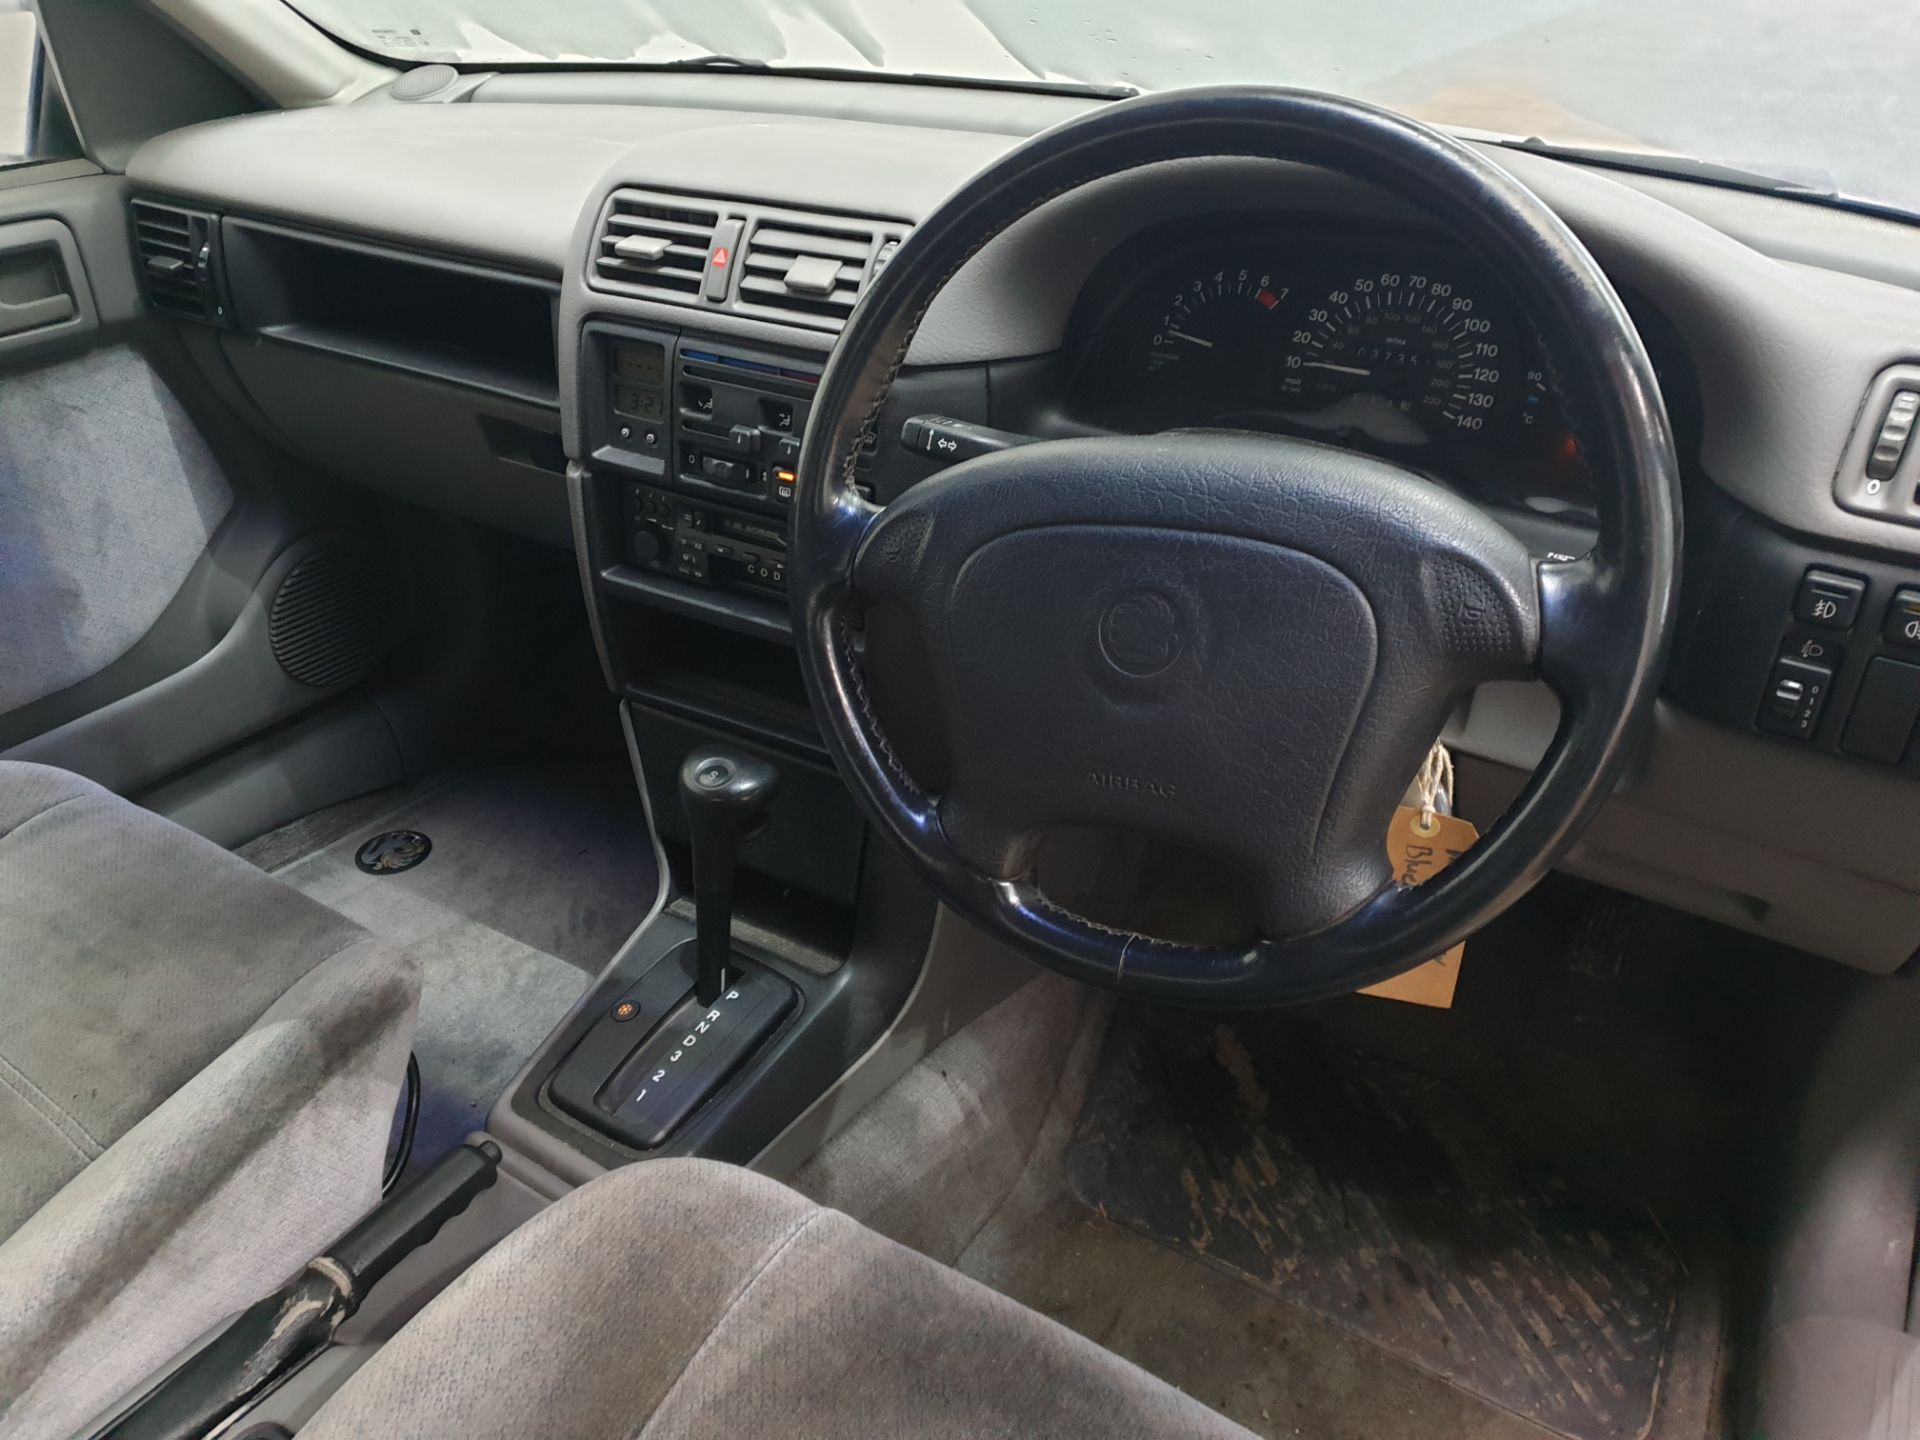 1994 Vauxhall Cavalier CD Auto - Image 14 of 16